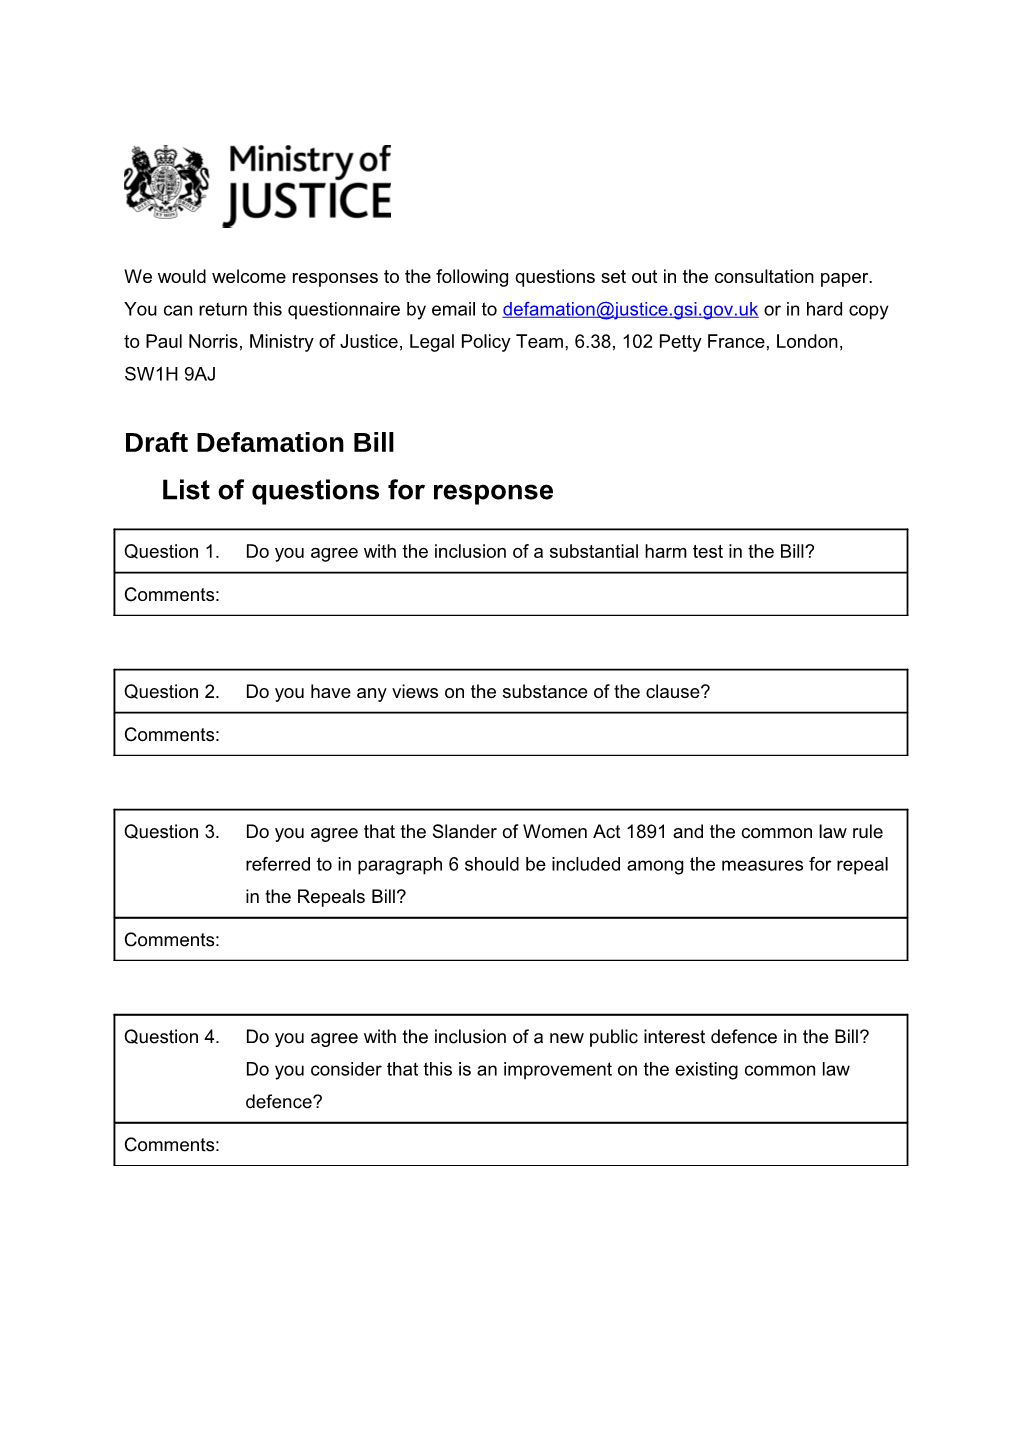 Draft Defamation Billlist of Questions for Response